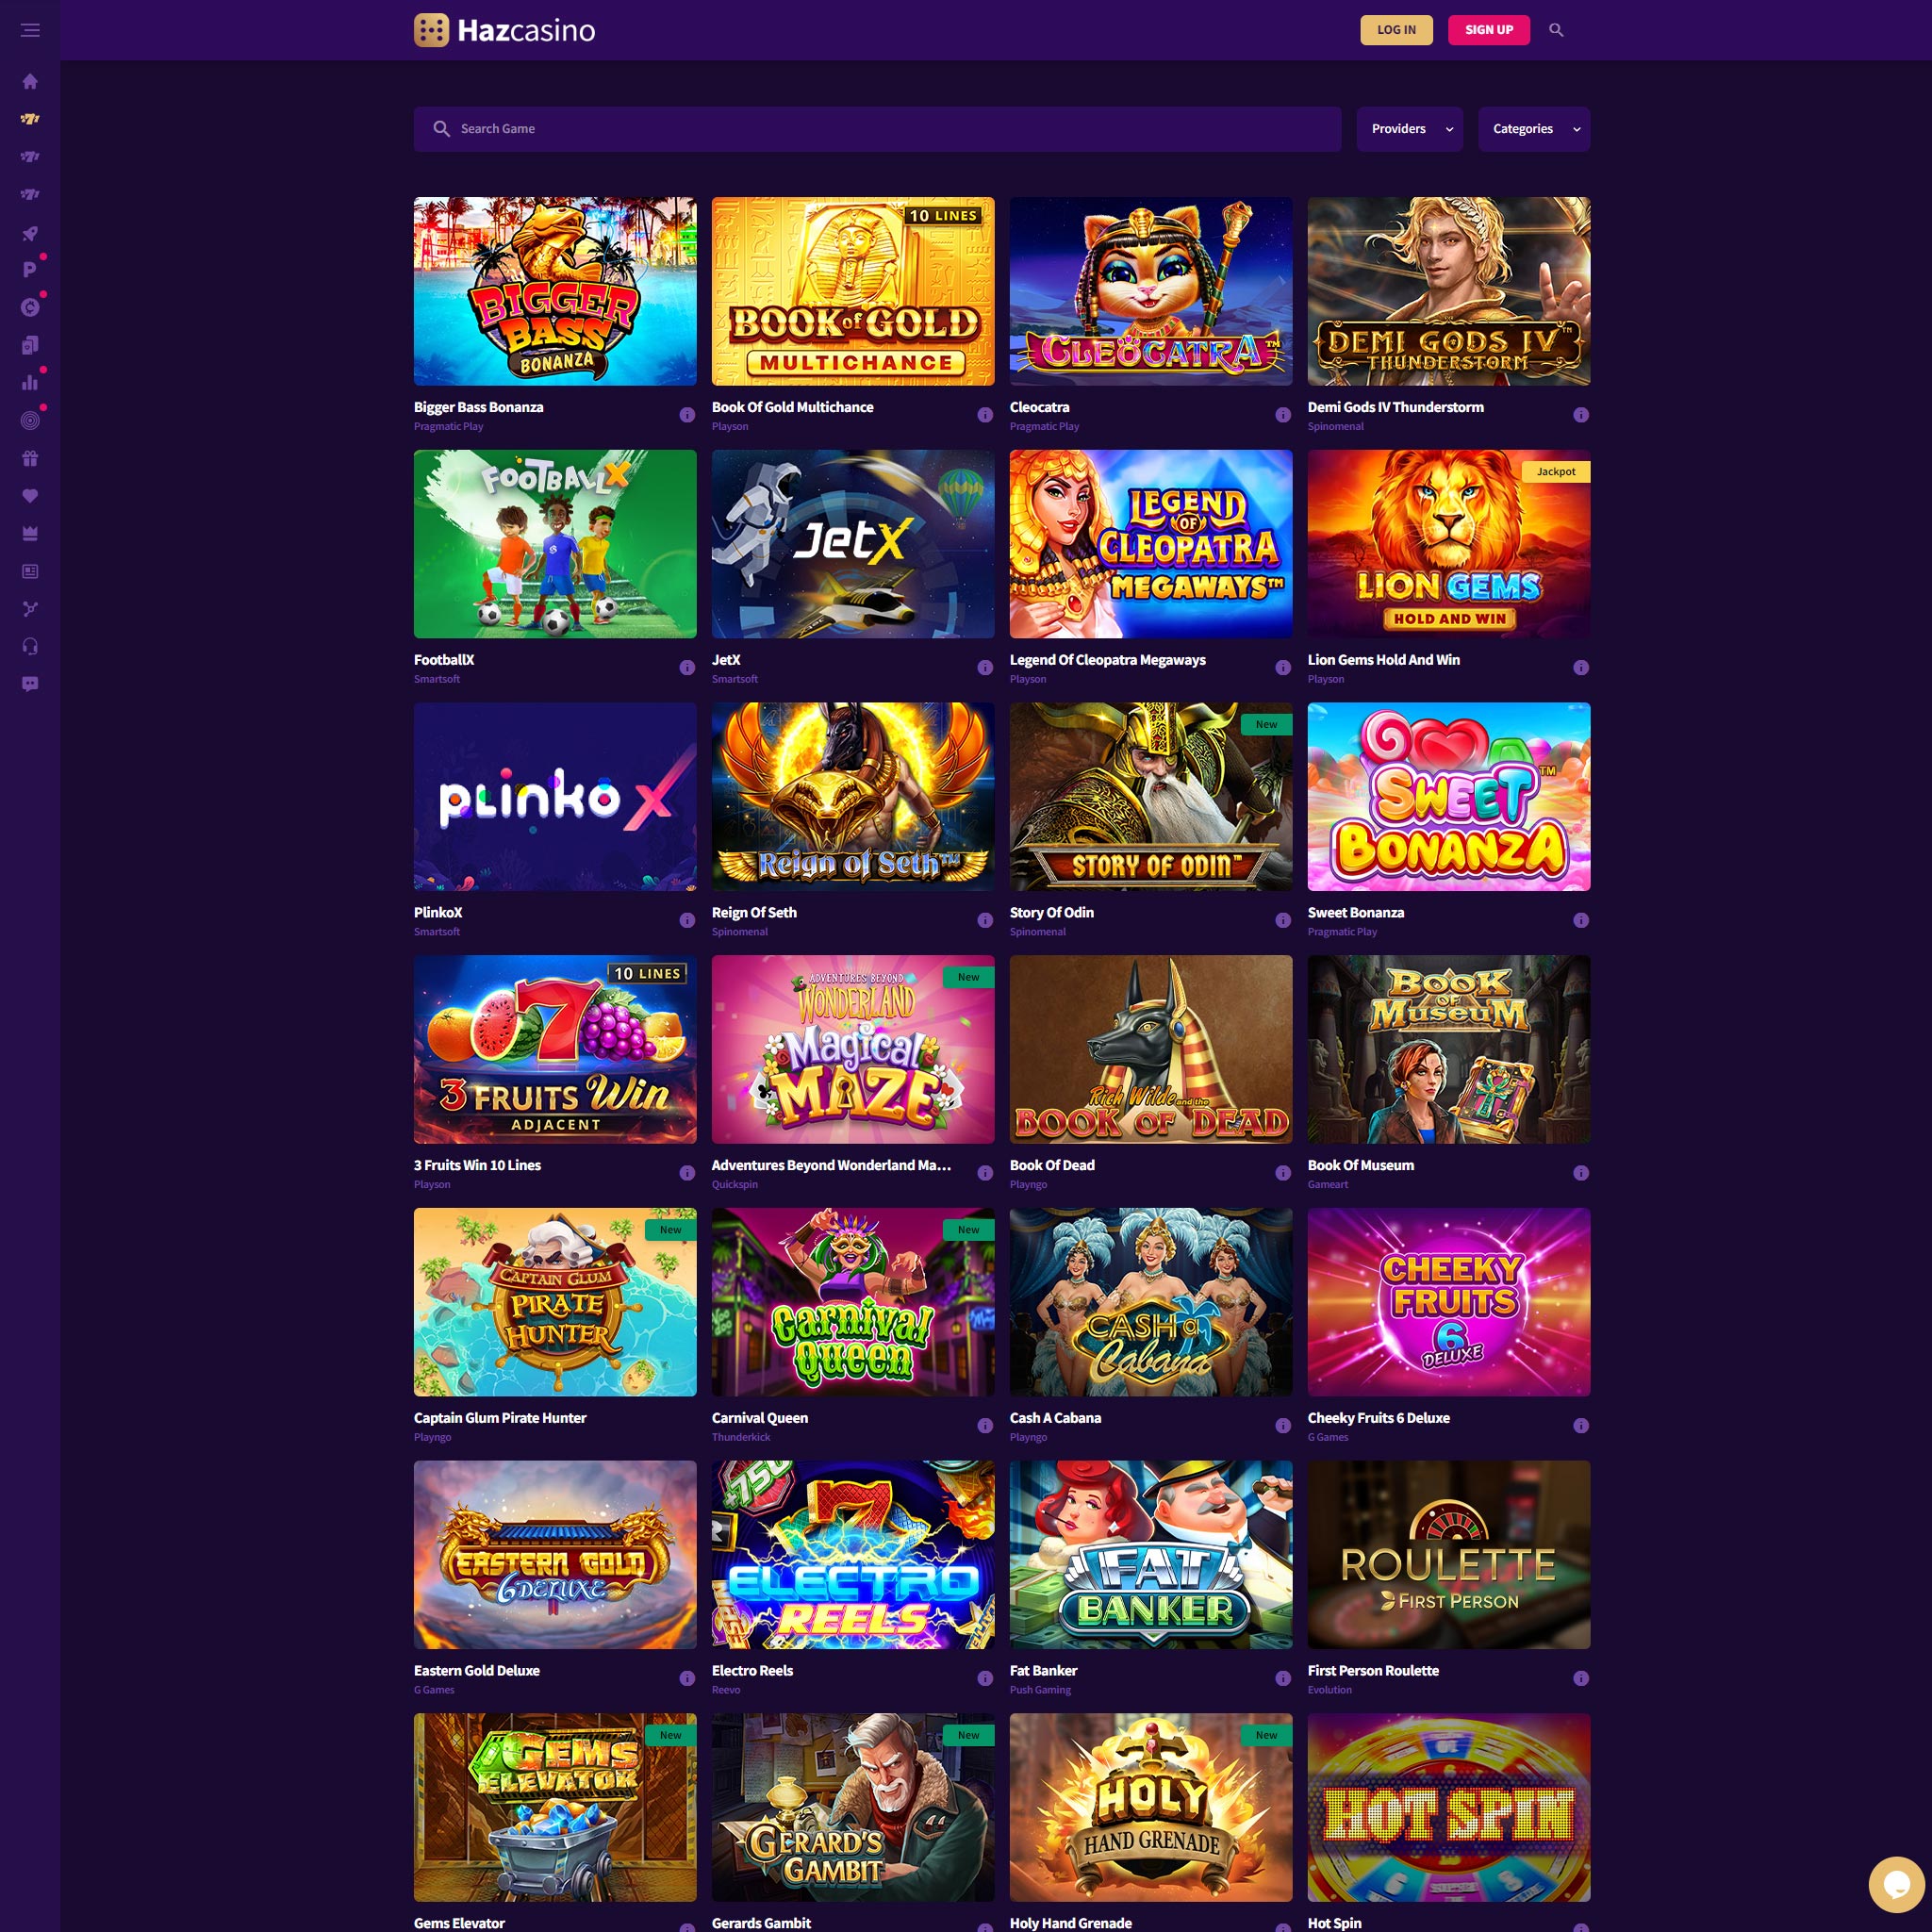 Haz Casino full games catalogue